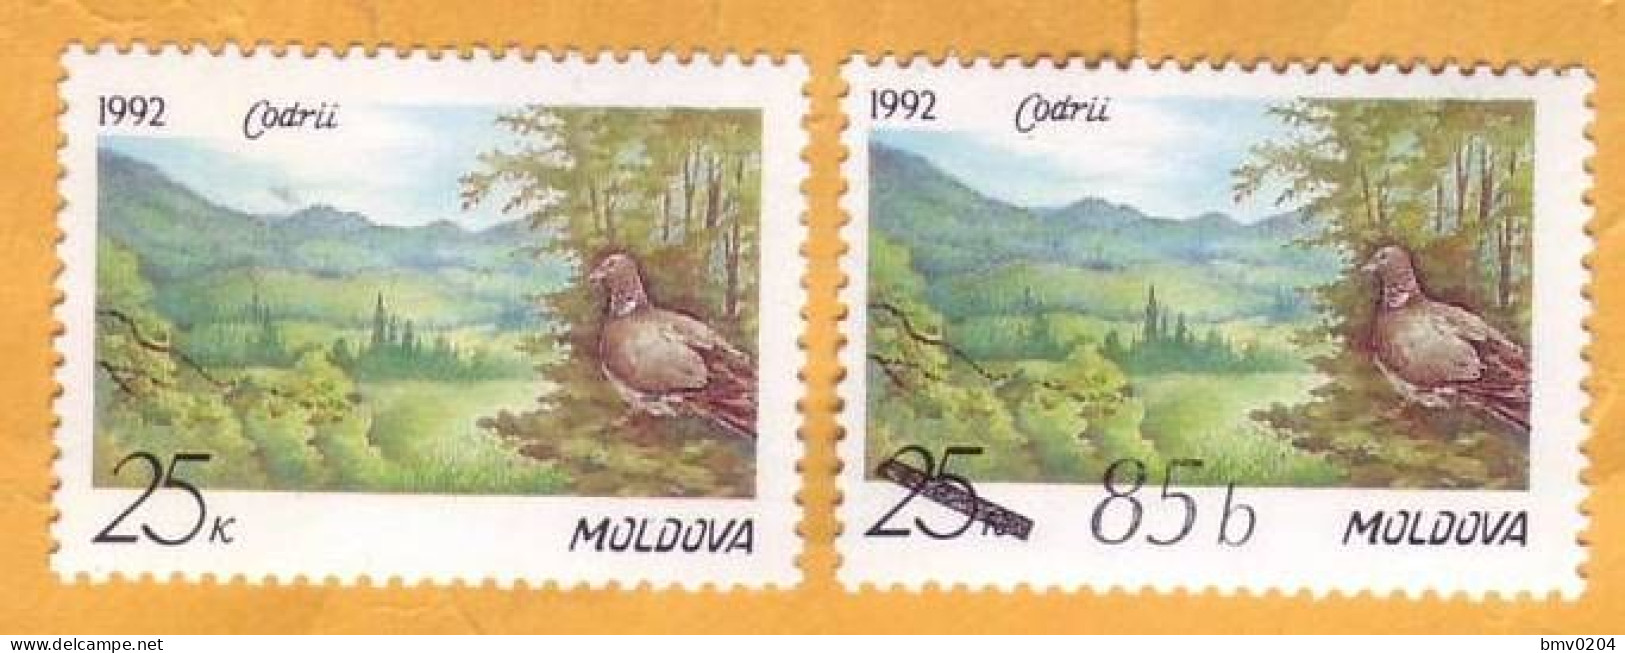 1992 2007 Moldova Moldavie Moldau 2v Mint  Birds. Ringdove. Fauna. Forest. Landscape - Columbiformes